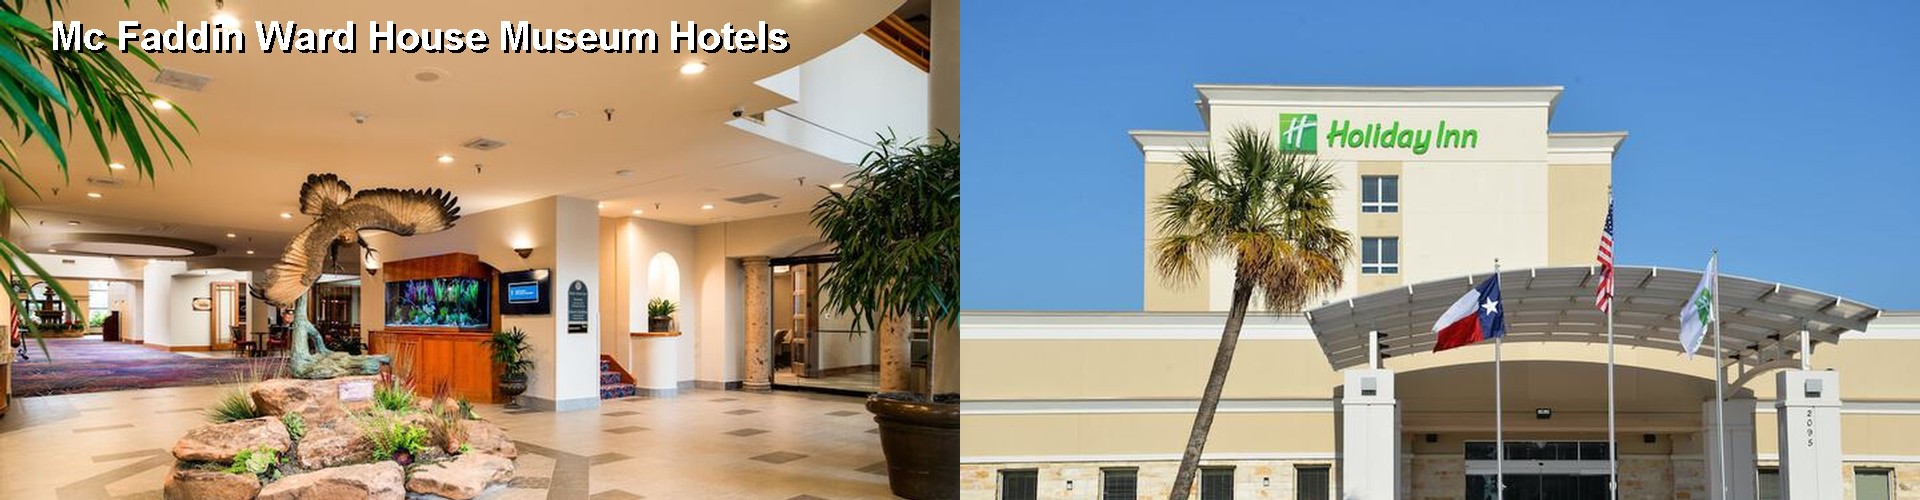 3 Best Hotels near Mc Faddin Ward House Museum